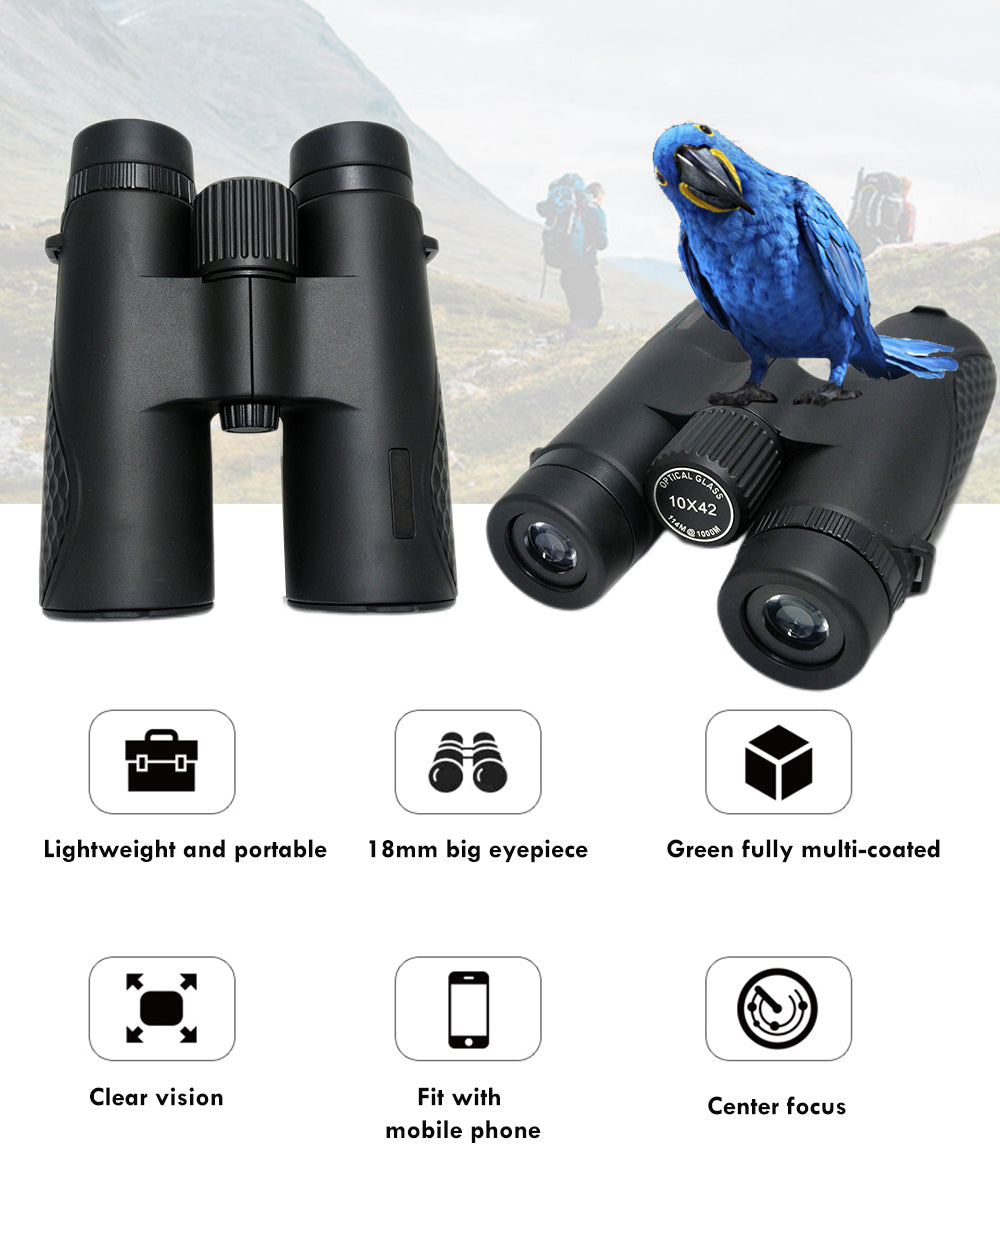 Best Bird Watching Binoculars Dual Eye Telescope 10X42 Roof Binoculars for Hunting